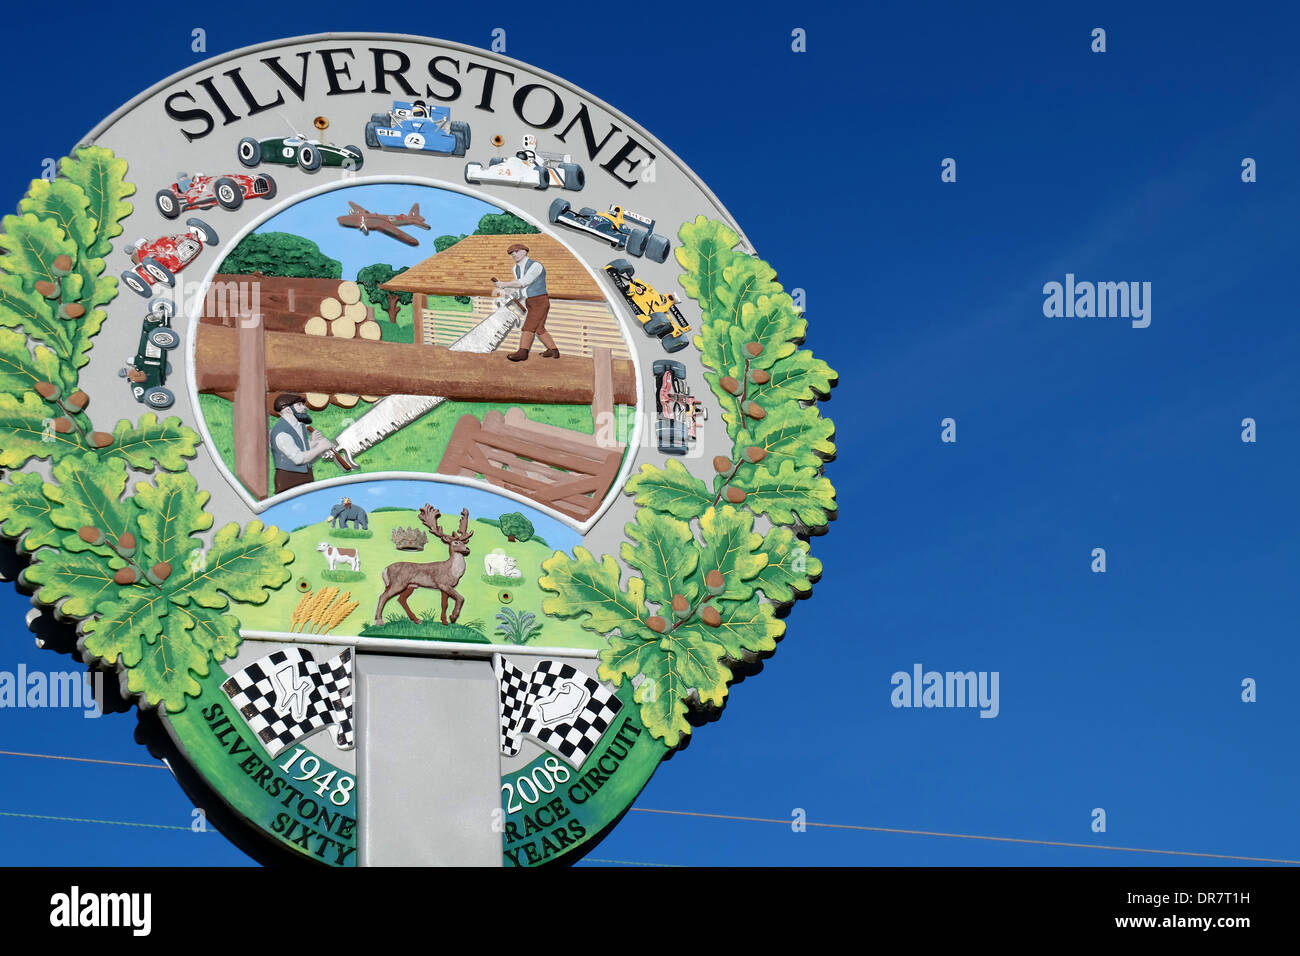 Silverstone village sign Stock Photo